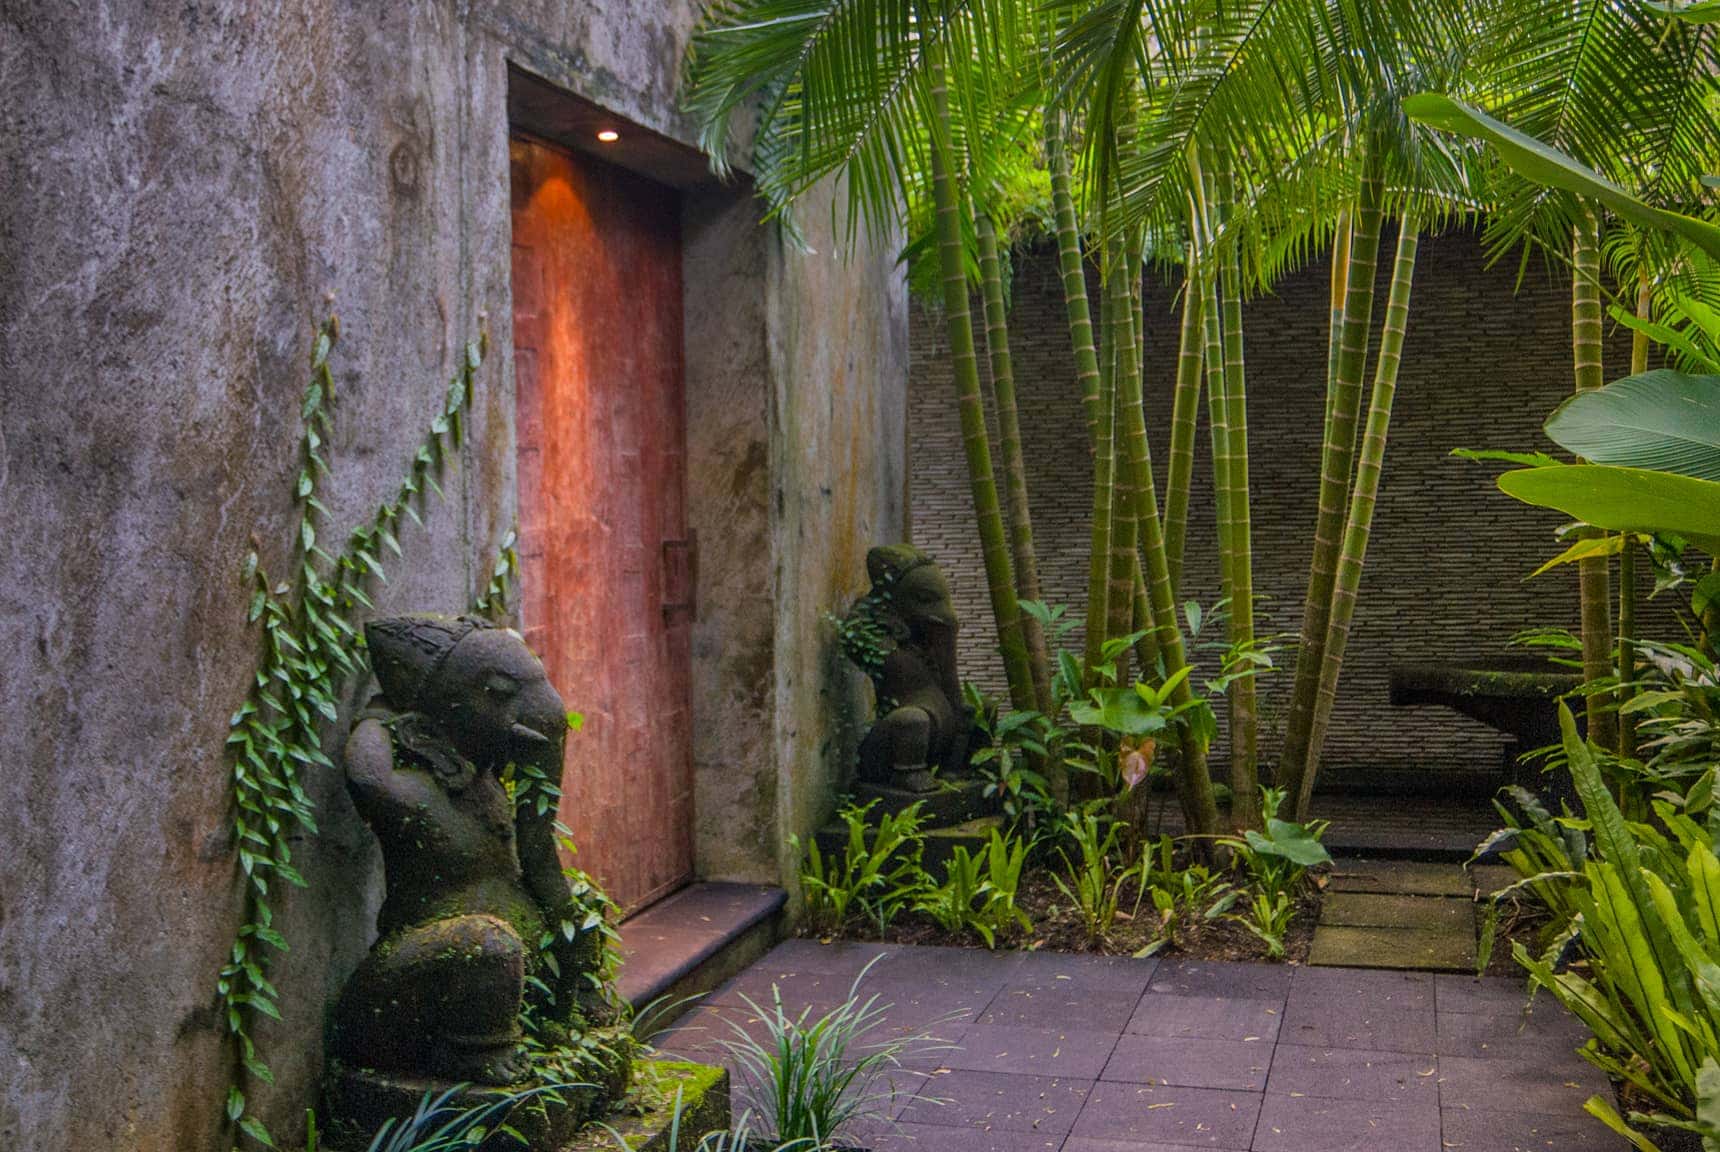 Villa Maya - Canggu, Bali Indonesia (Bali villa photography by master photographer Rick Carmichael of LuxViz)